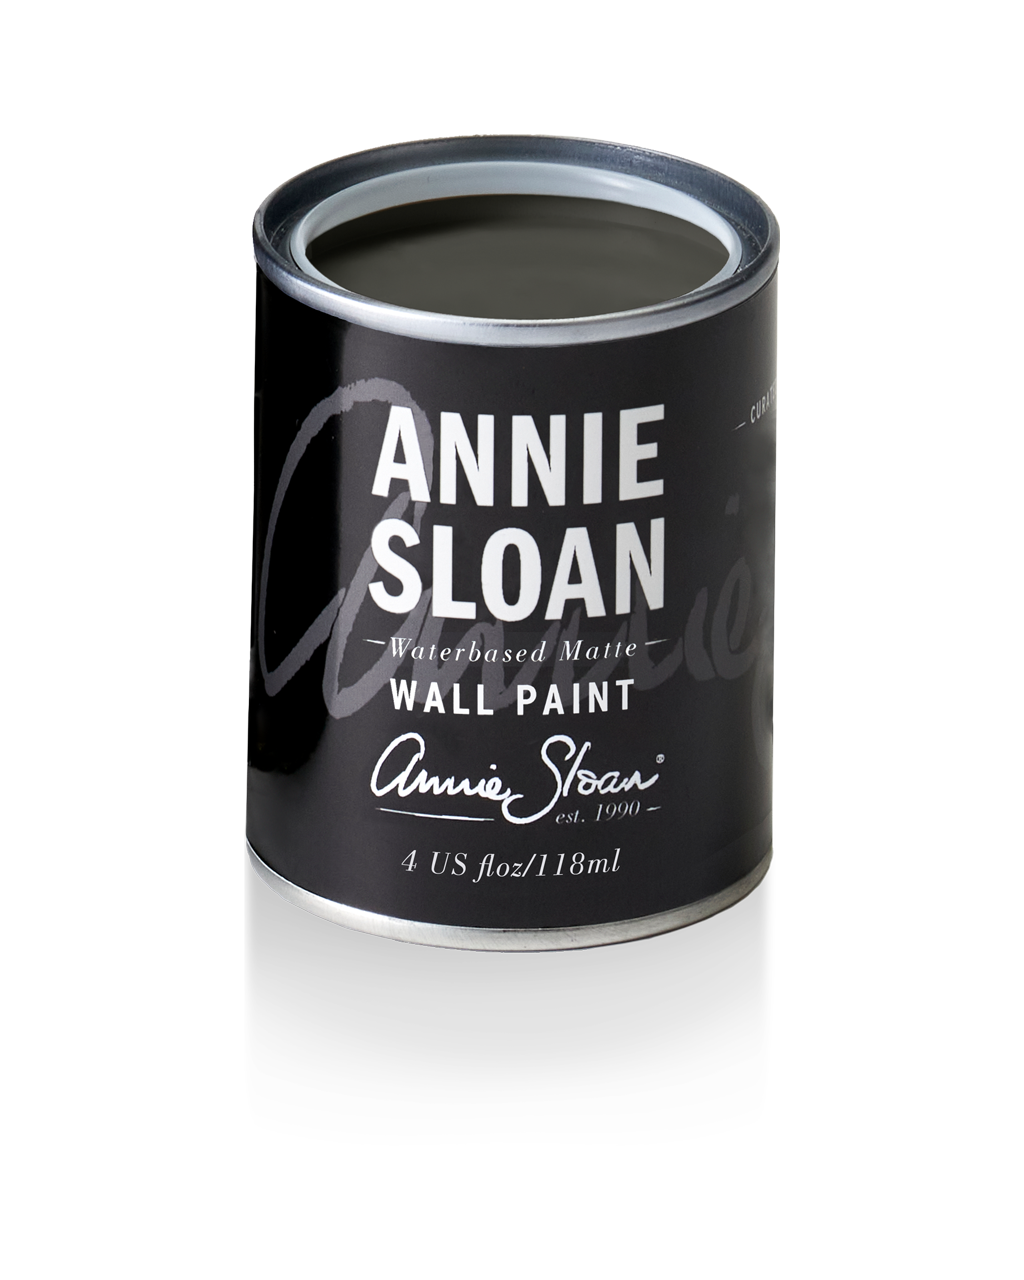 Annie Sloan Wall Paint - Graphite